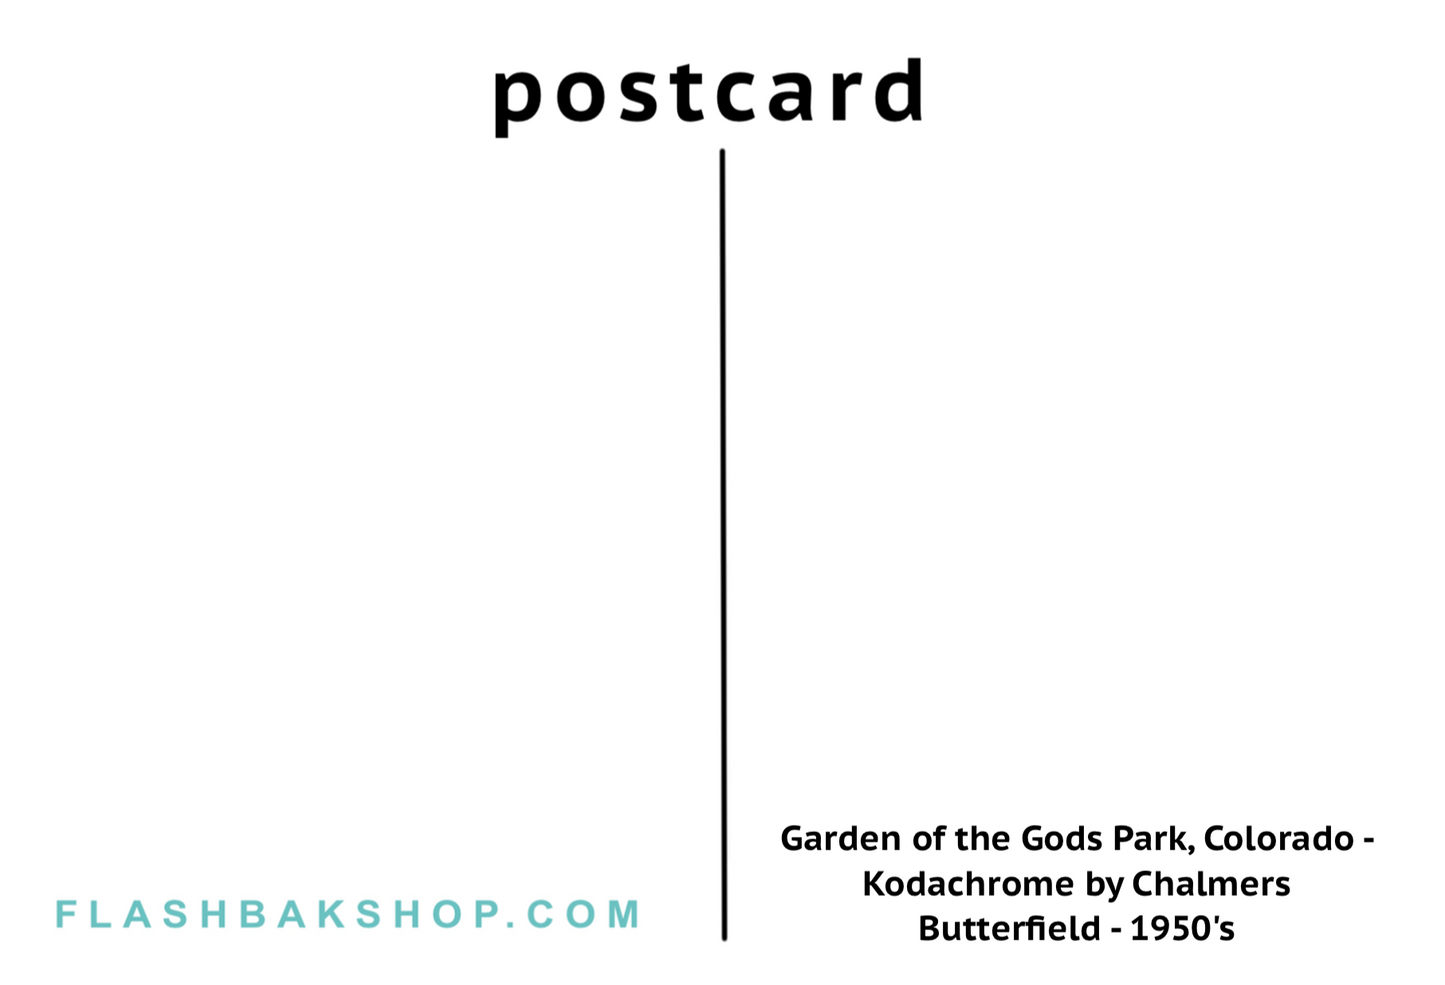 Garden of the Gods Park, Colorado - Kodachrome by Chalmers Butterfield, 1950's - Postcard